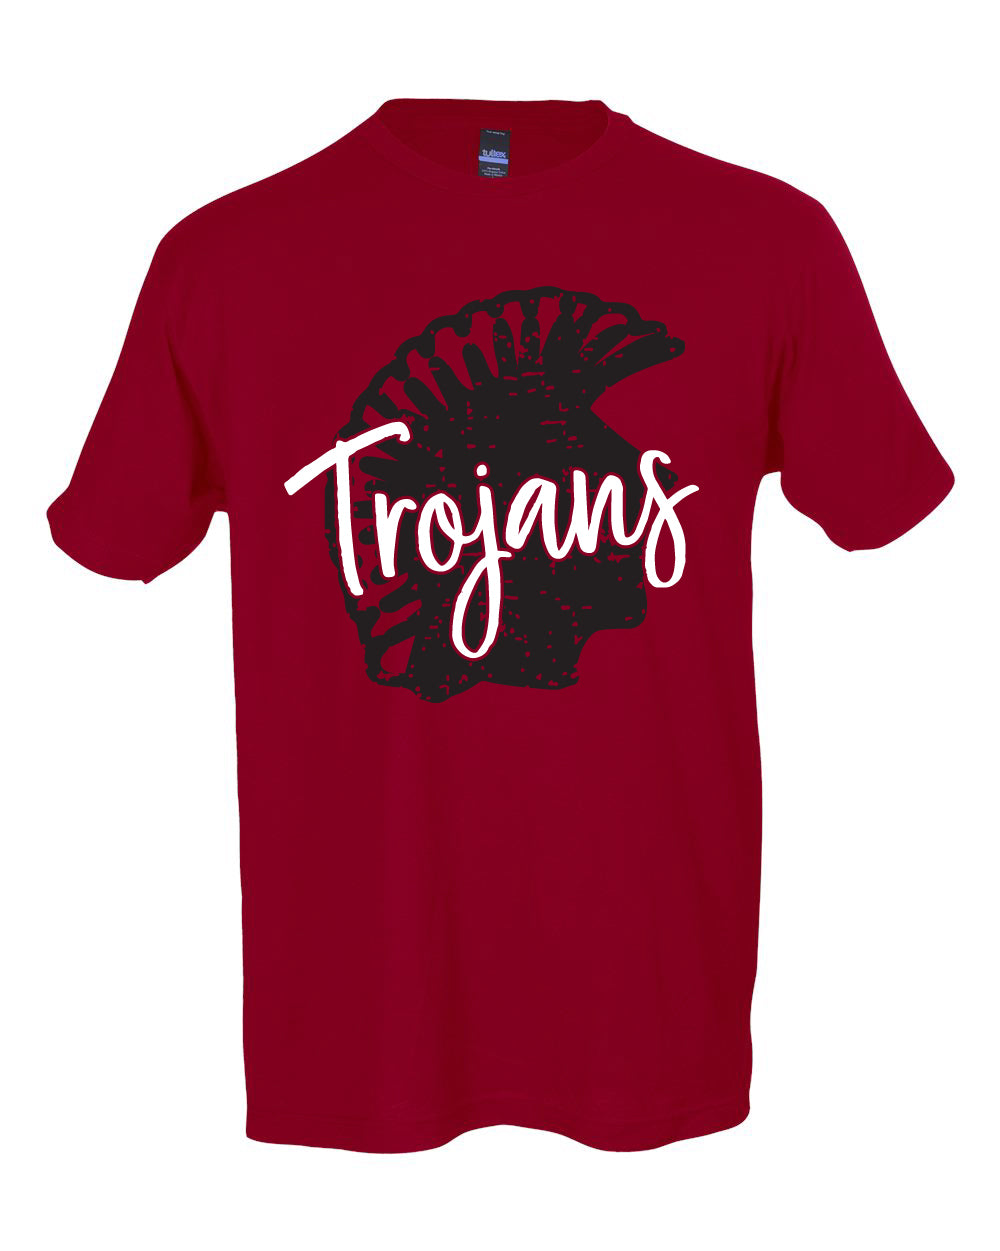 Trojan Warrior Shirt - CGHC